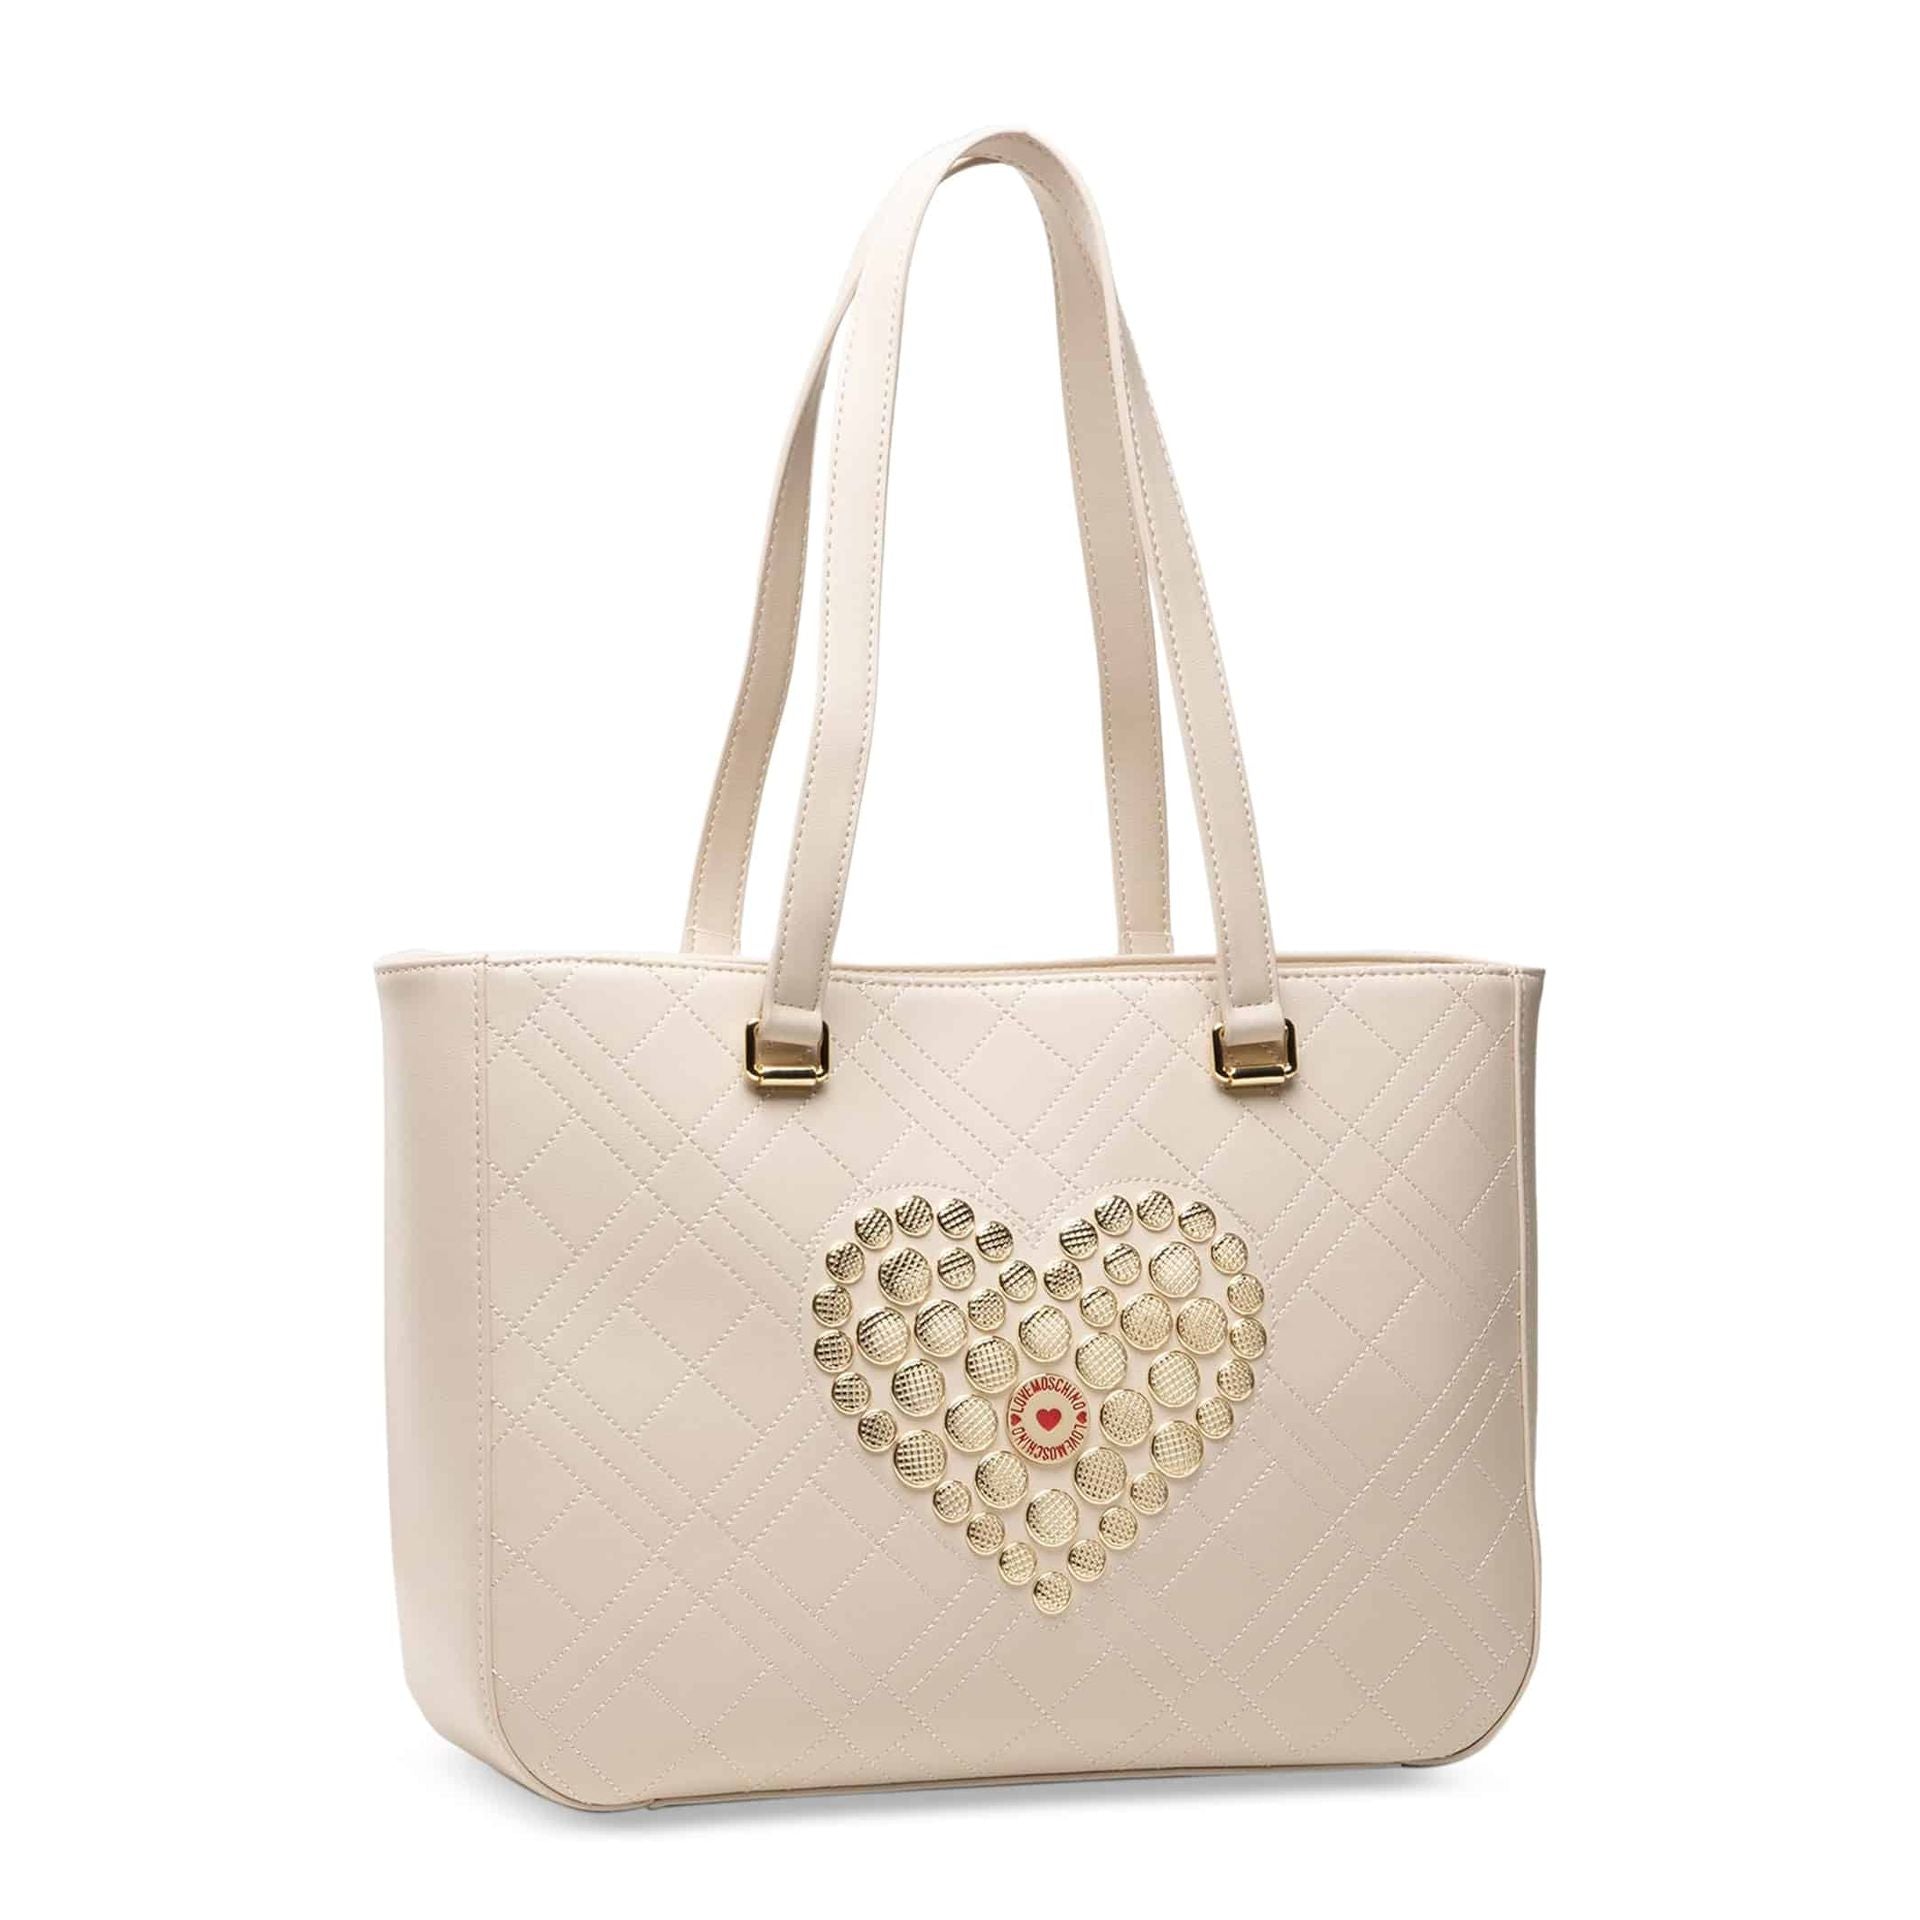 Love Moschino Shopping bags - Fizigo